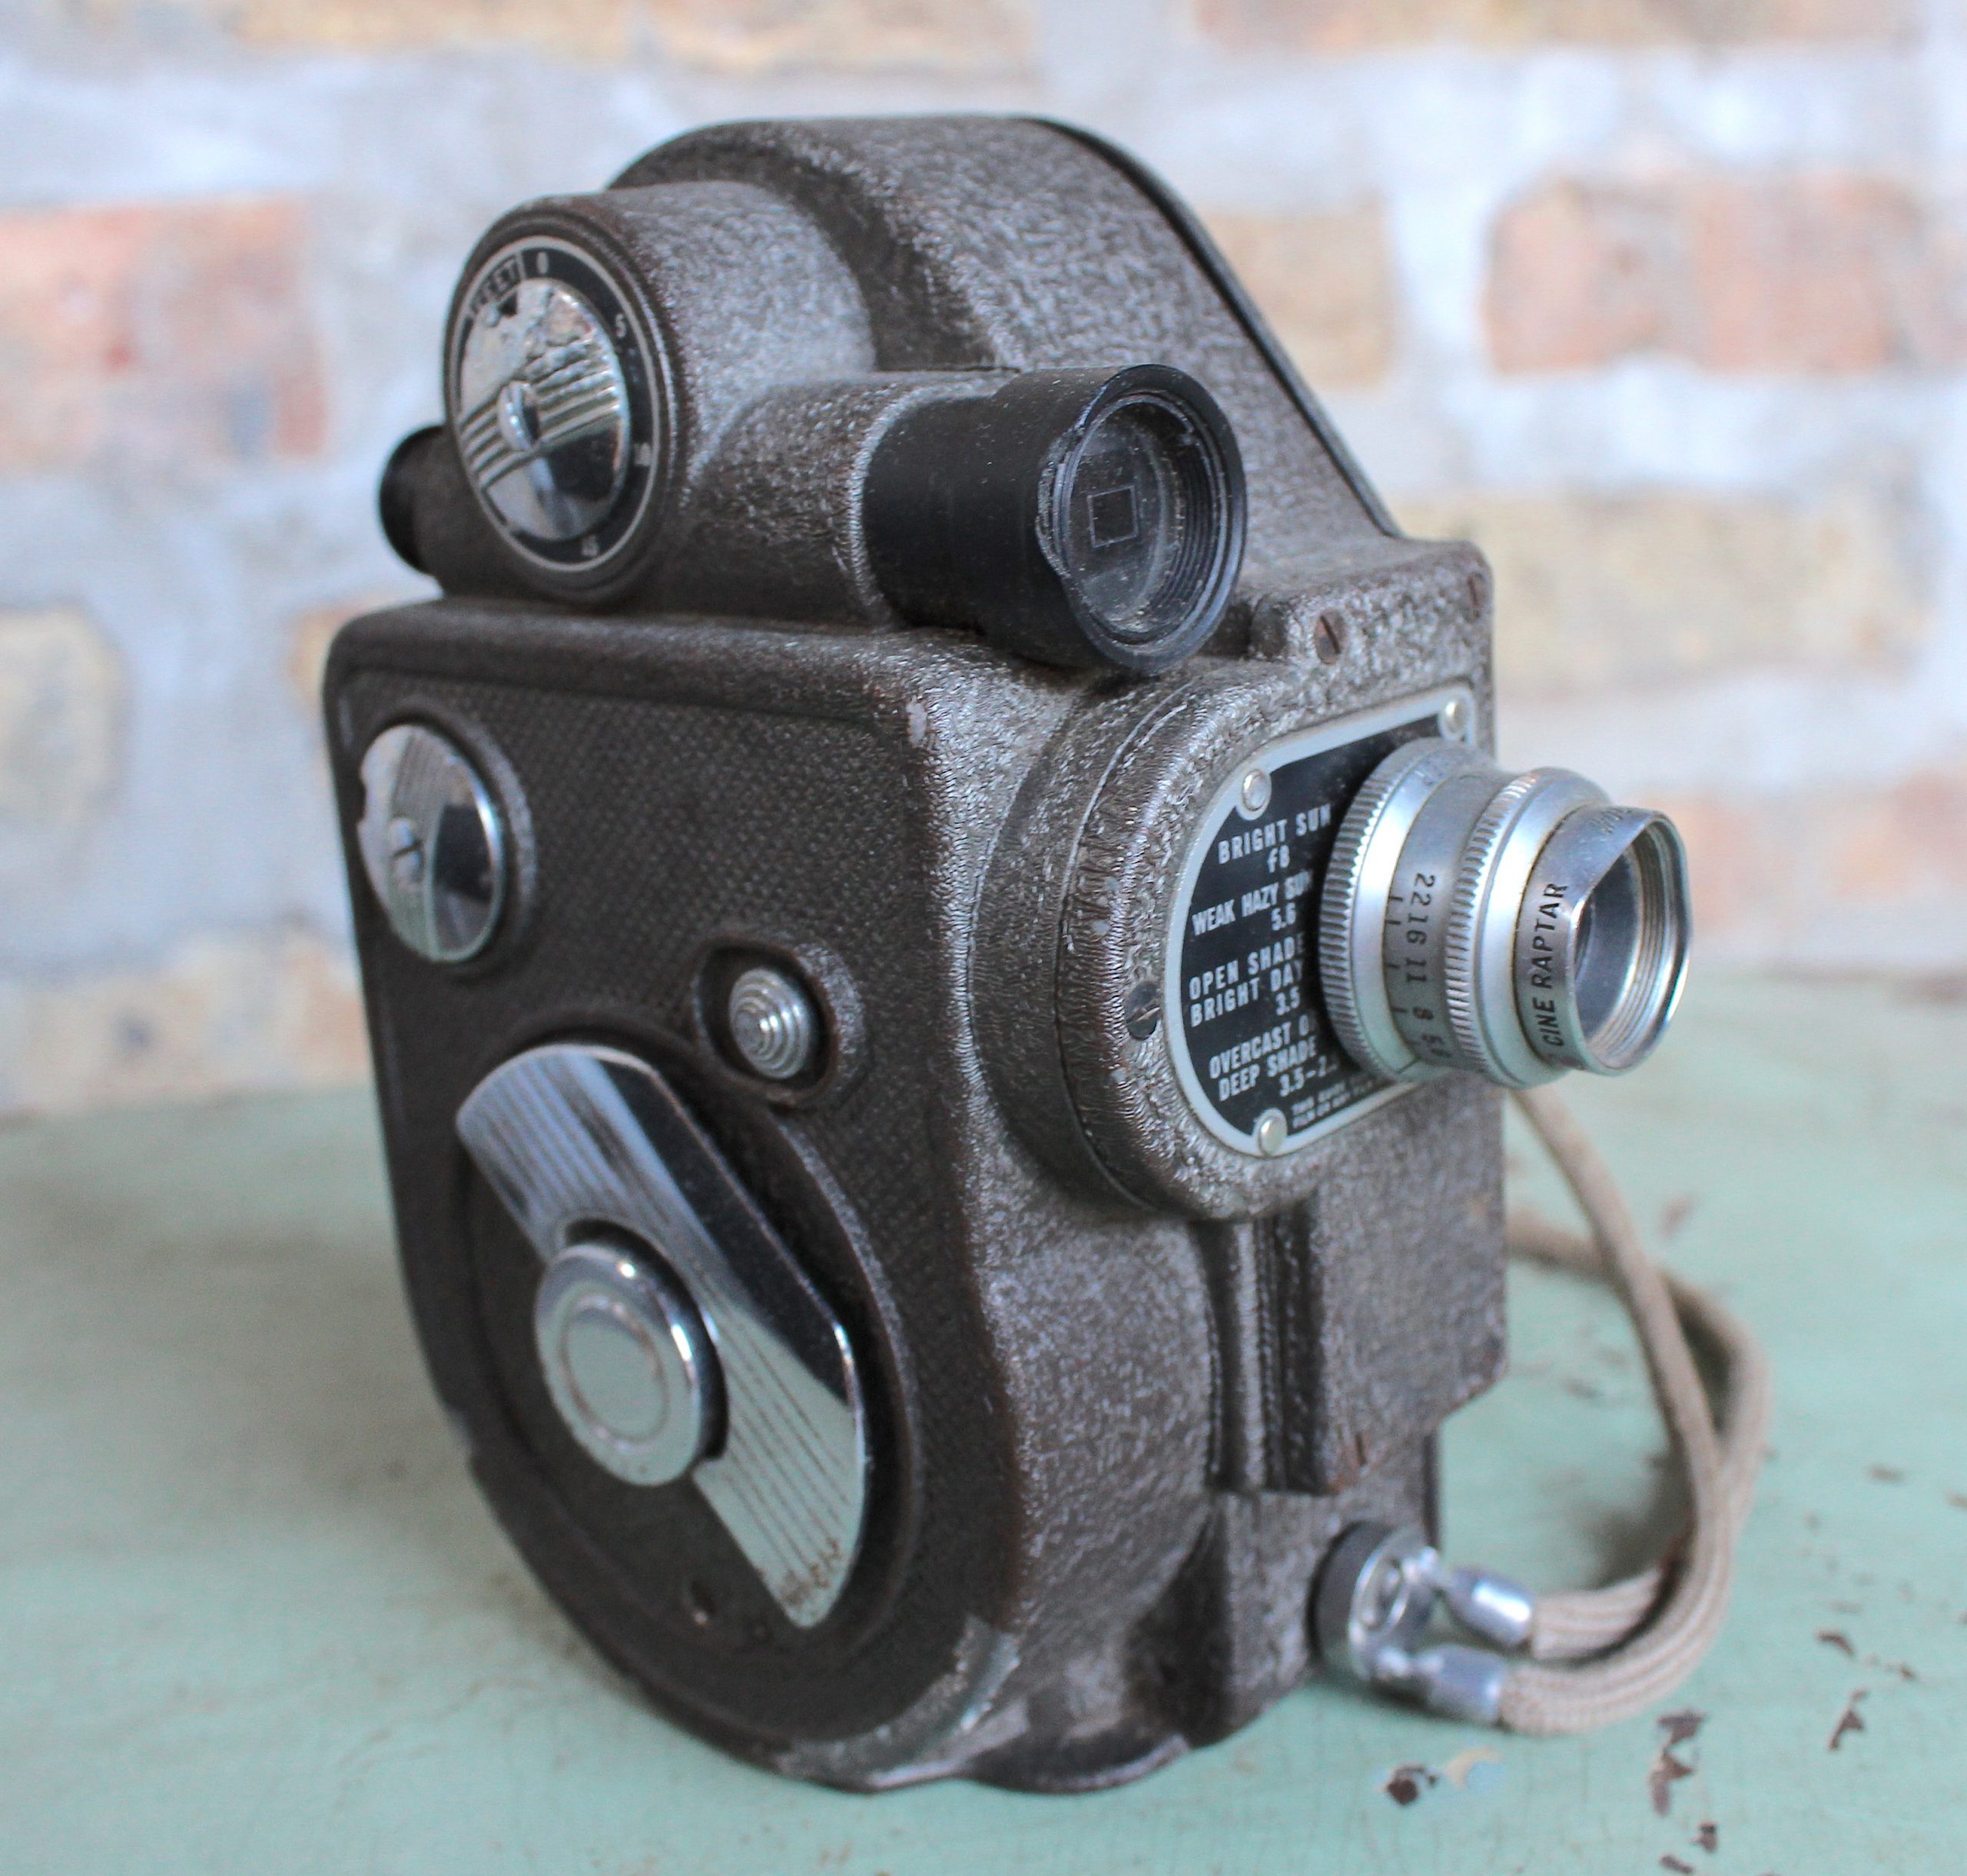 Revere Camera Company, est. 1939 - Made-in-Chicago Museum